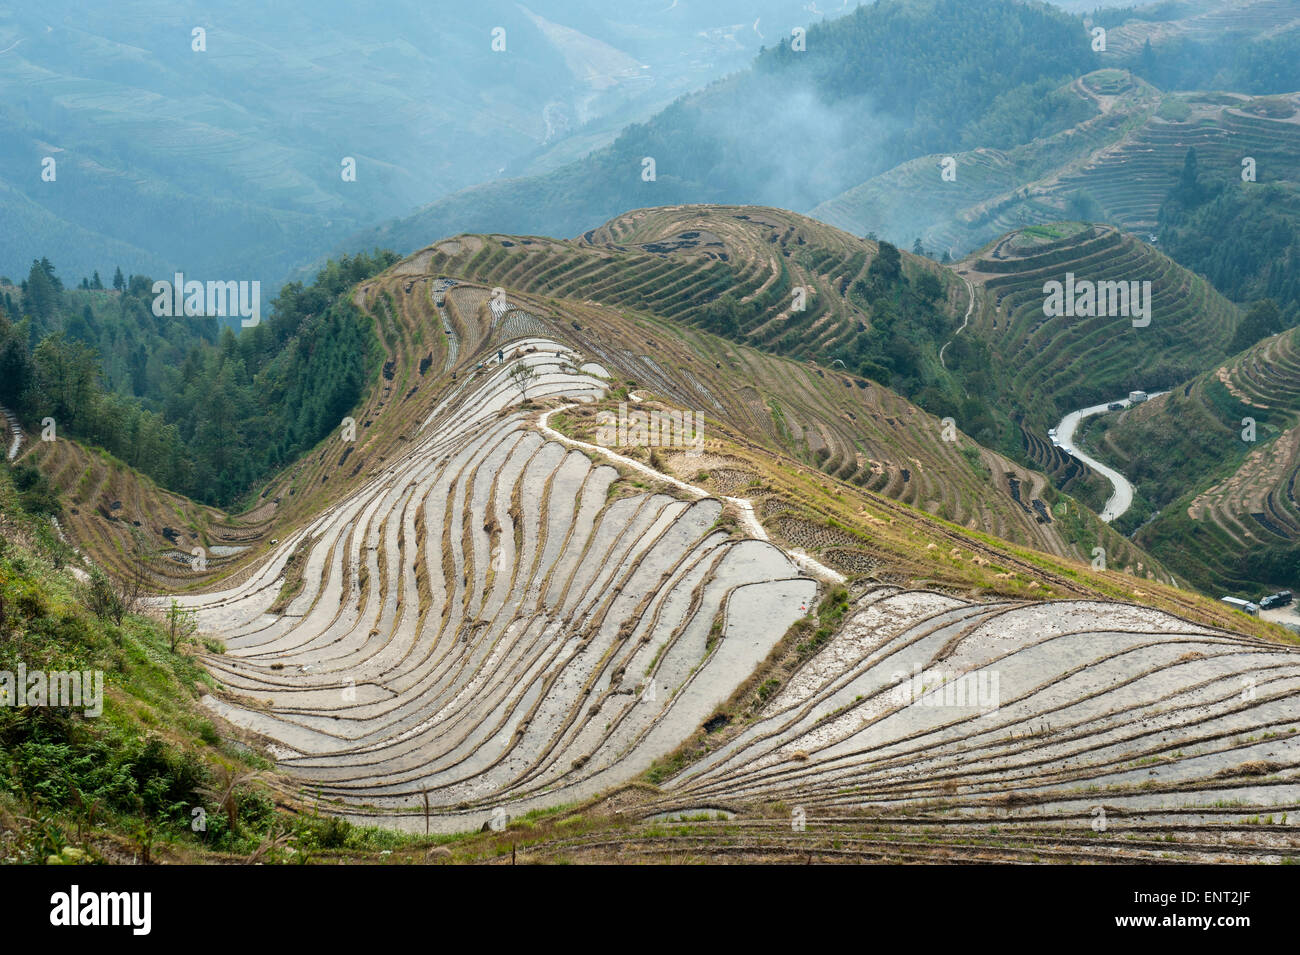 Longsheng terrazze di riso, Longji campi terrazzati, vicino a Guilin, Guangxi Regione autonoma, Cina Foto Stock